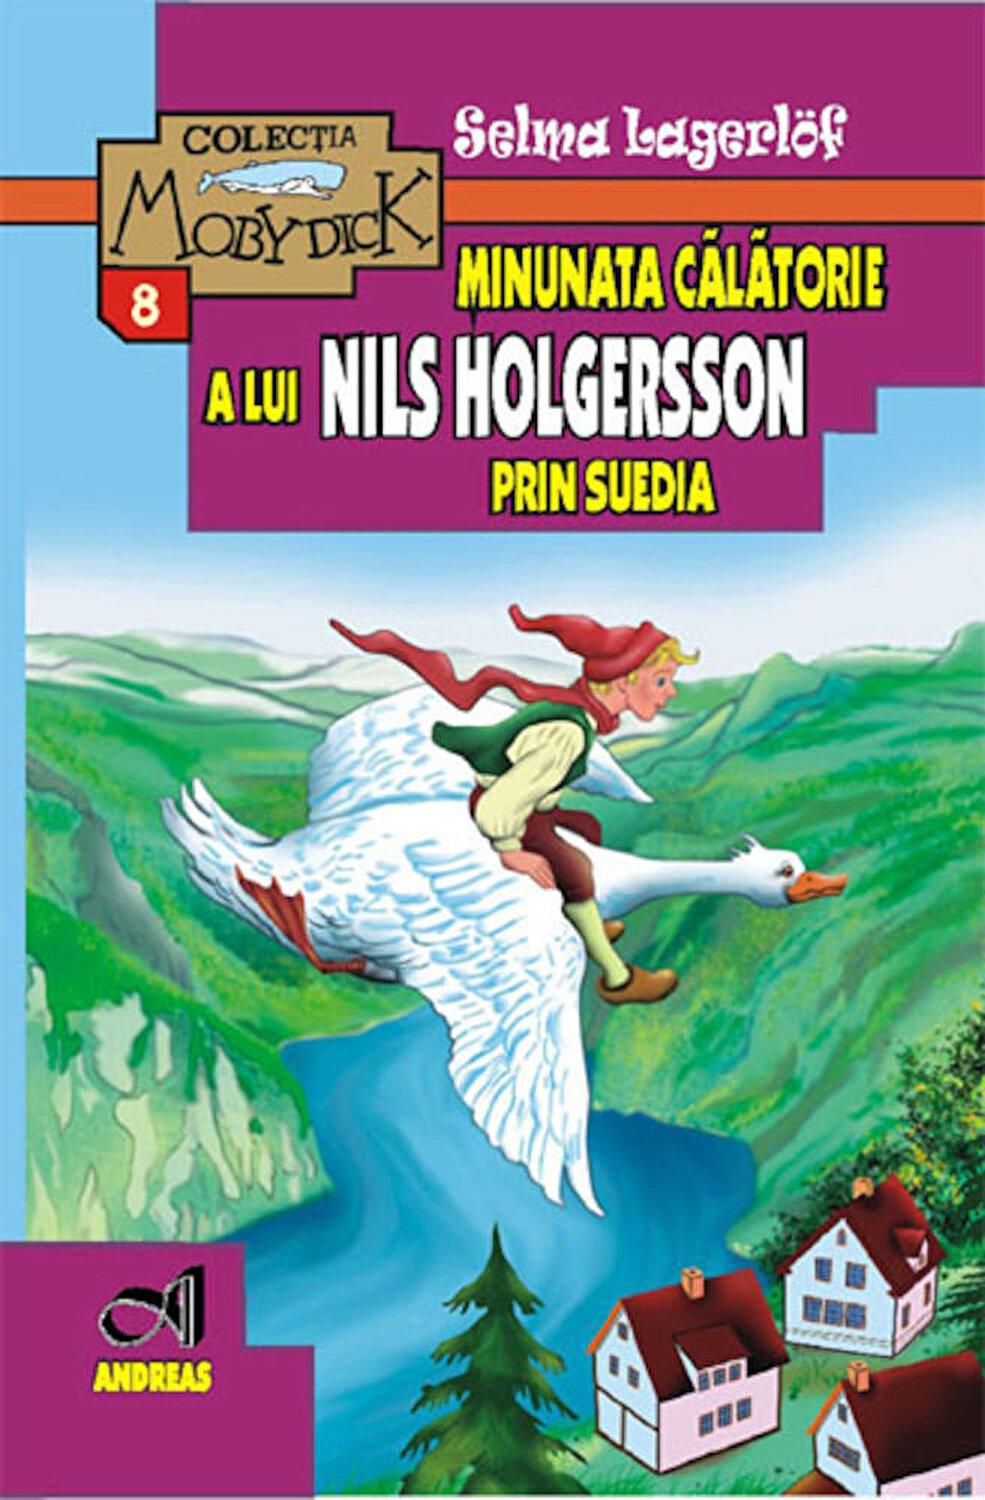 Minunata calatorie a lui Nils Holgersson in Suedia | Selma Legerlof Andreas 2022